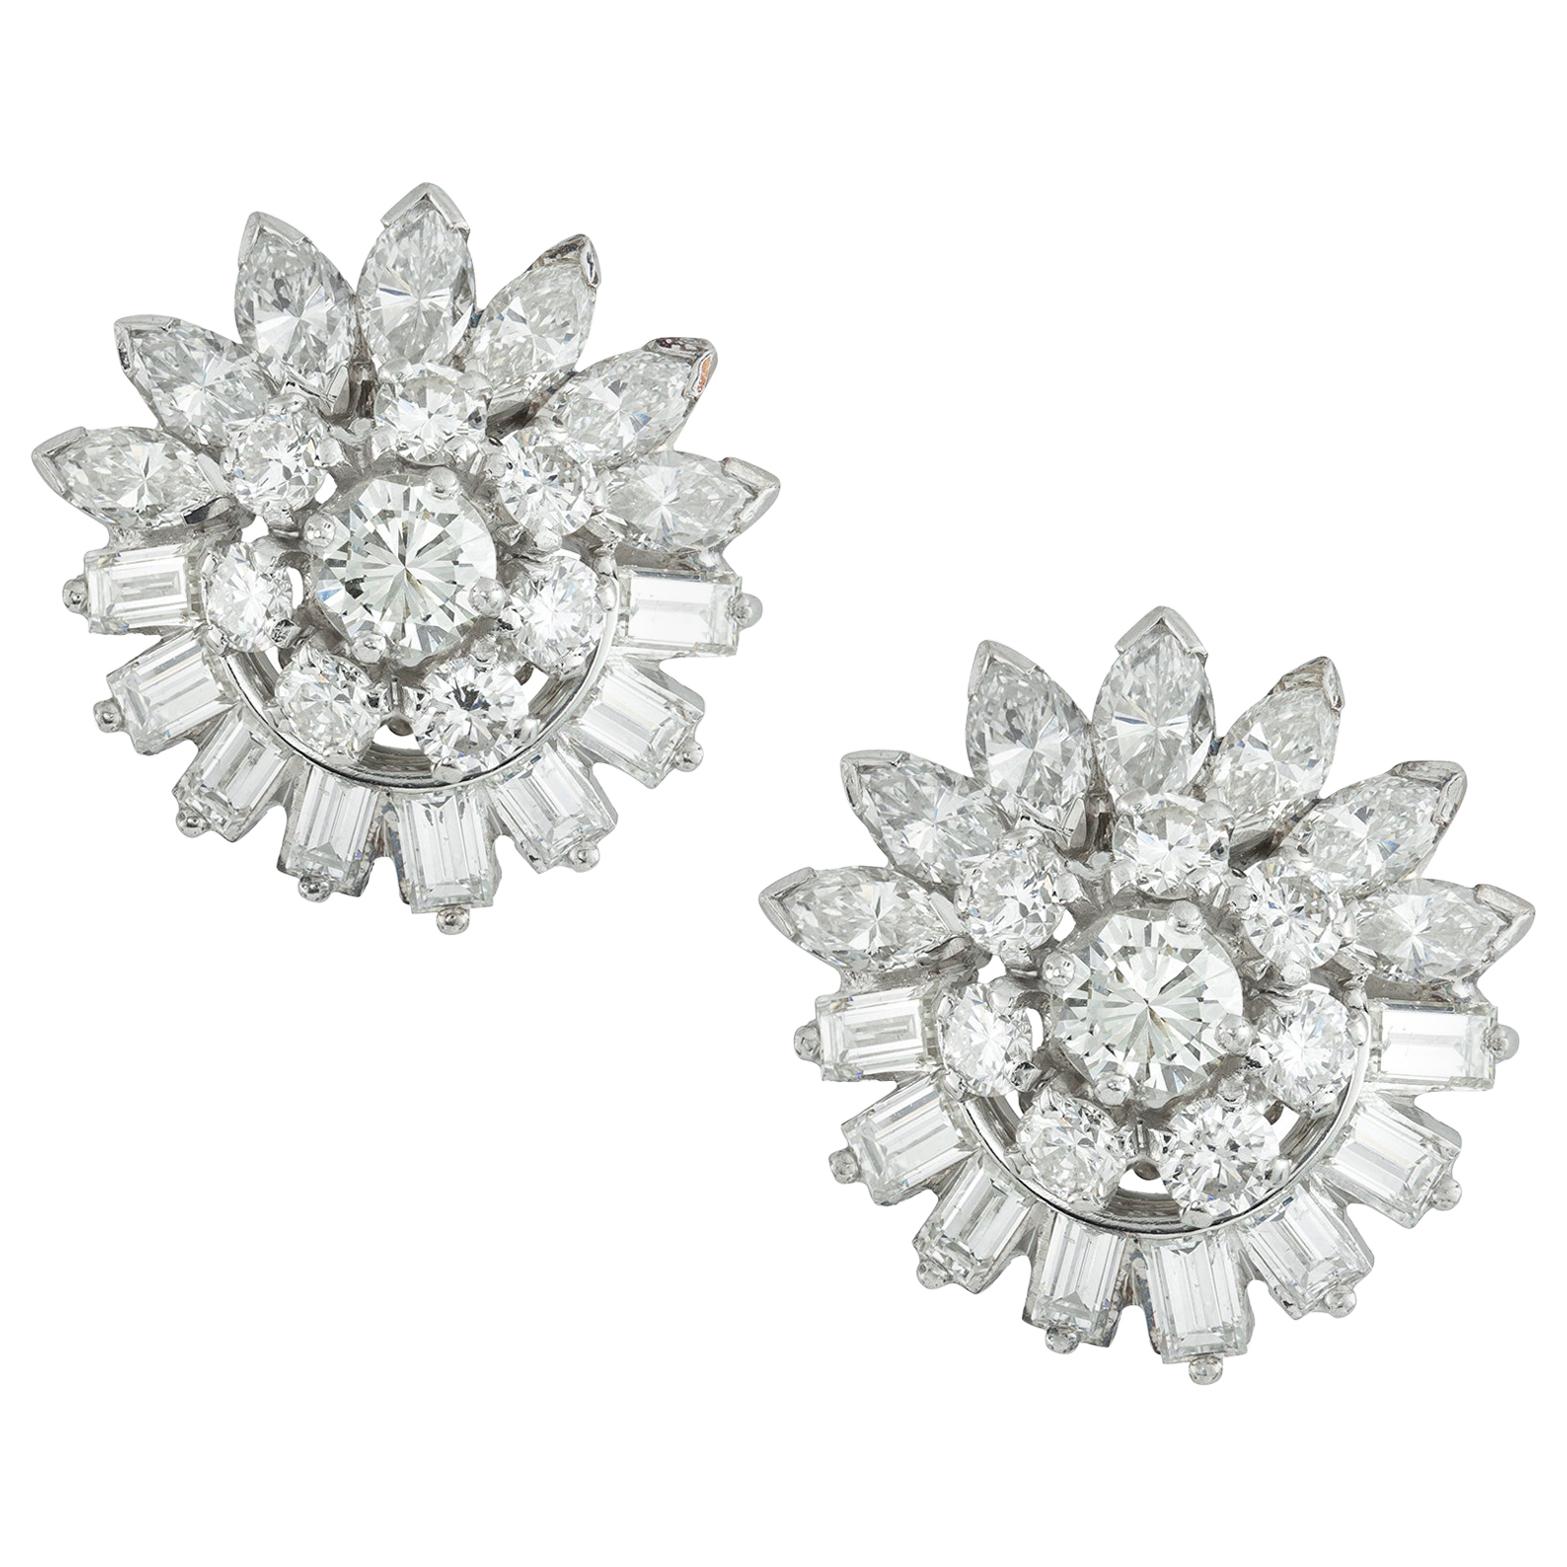 Pair of Mid-20th Century Diamond Earrings